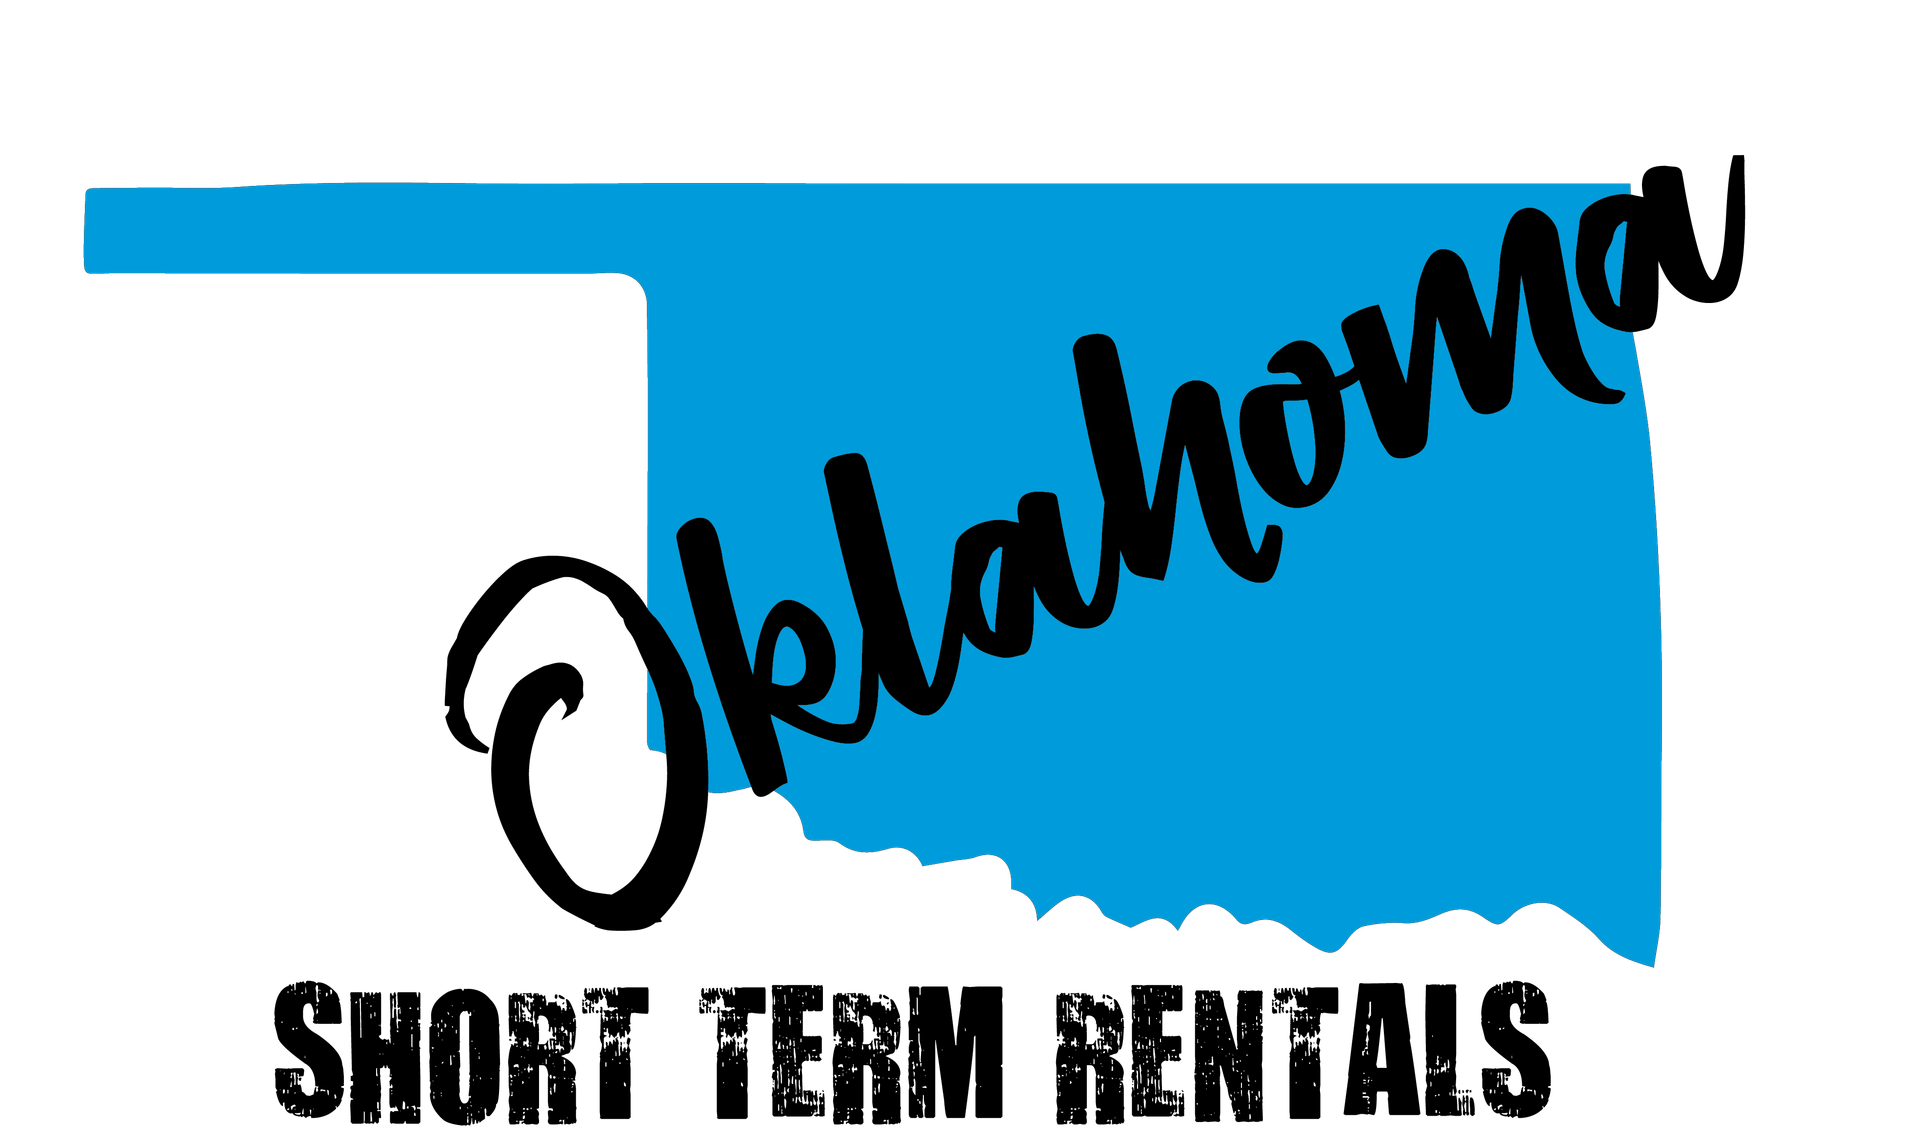 Oklahoma Short Term Rentals